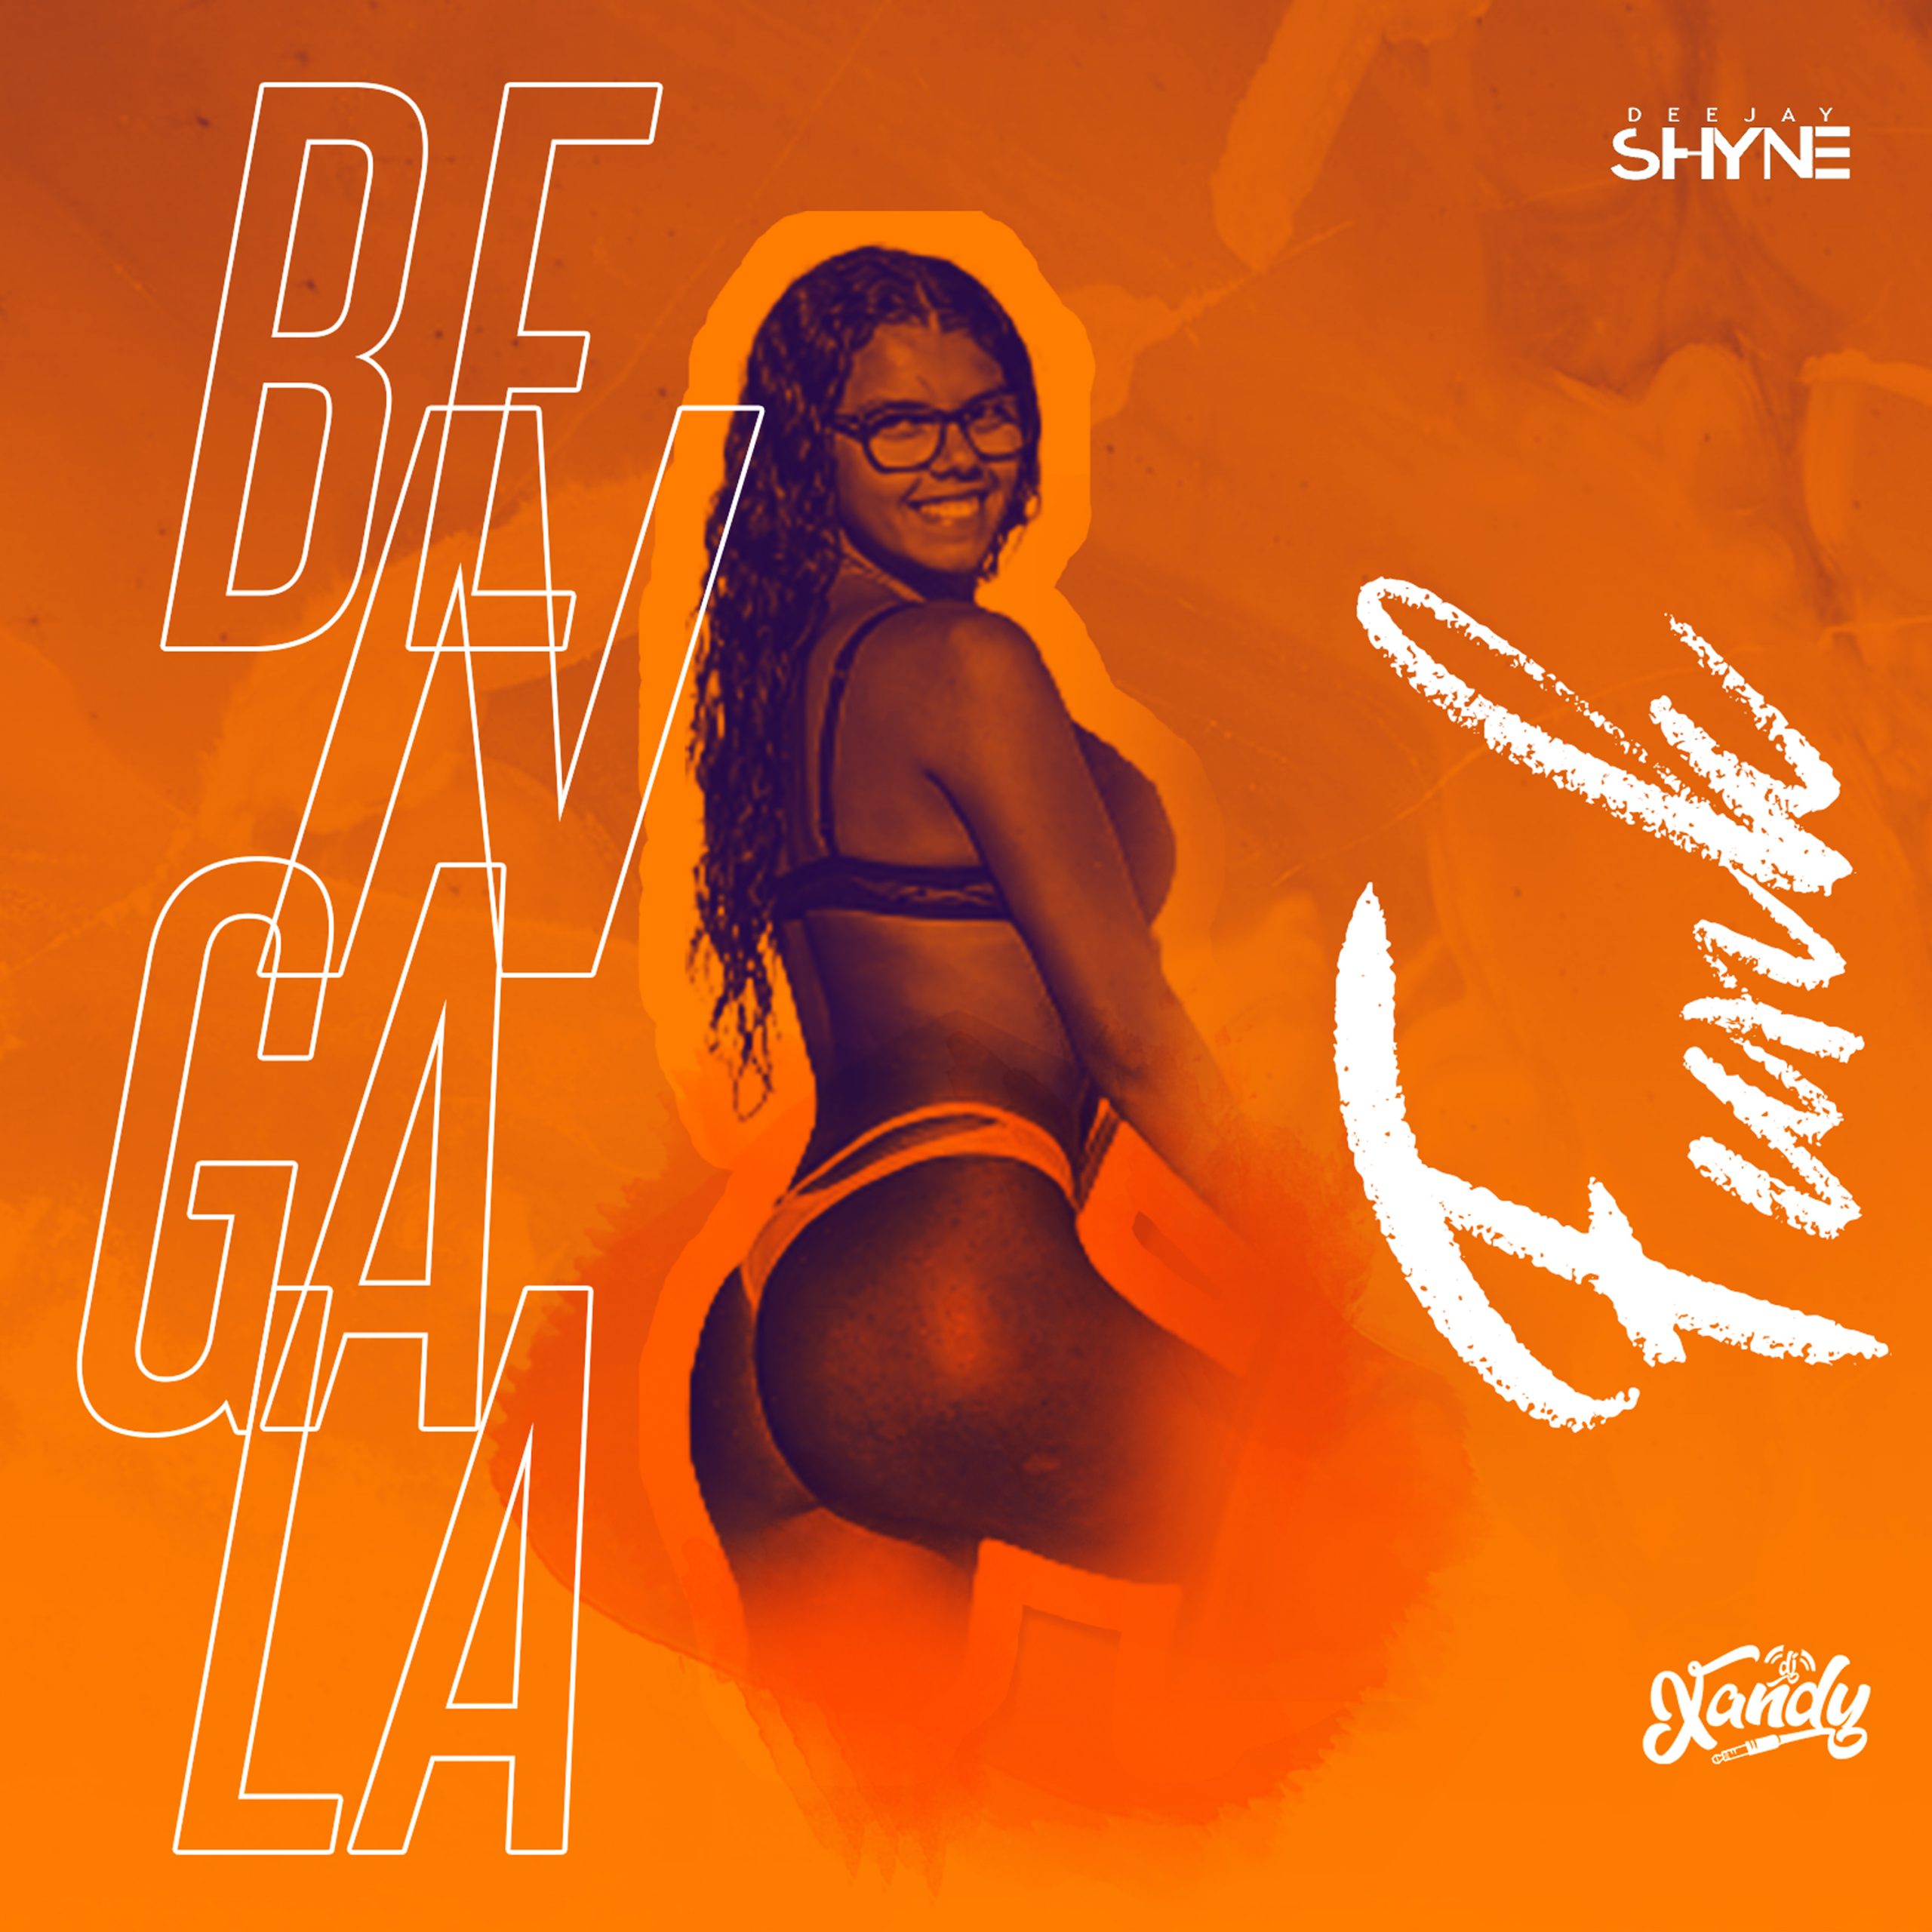 Dj Xandy – Bengala Funk ft Dj Shyne